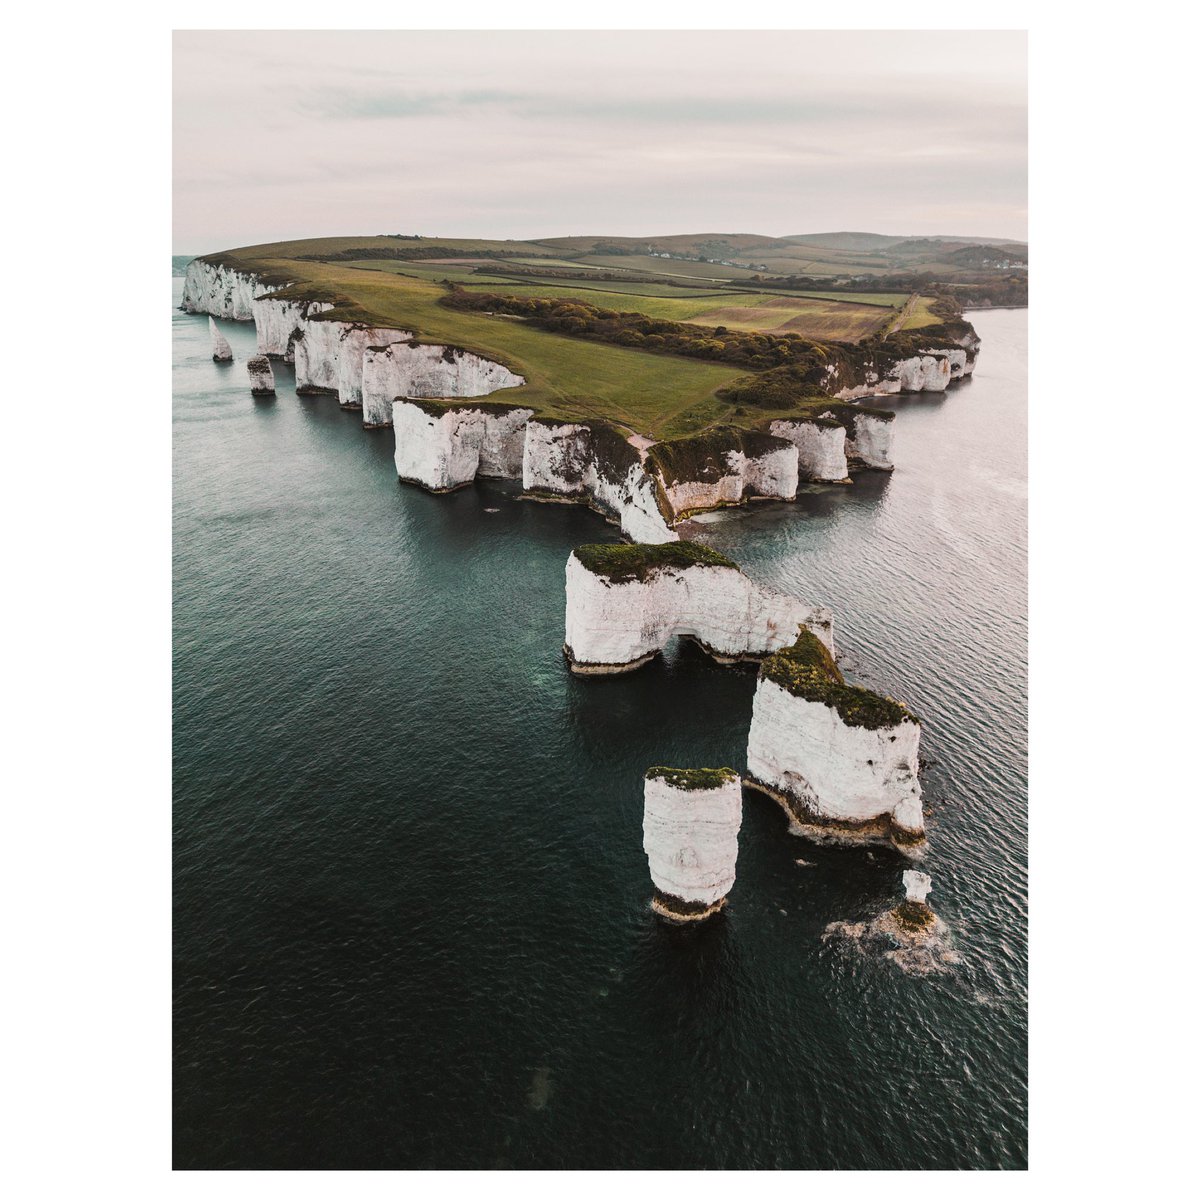 Old Harry Rocks - © Chris Bailey 2023 📸

#OldHarryRocks #Swanage #DJI #DronePhotography #AerialPhotography #Drone #Landscape
#LandscapePhotography #JurassicCoast #VisitEngland #Dorset

@VisitEngland @VisitDorset ❤️